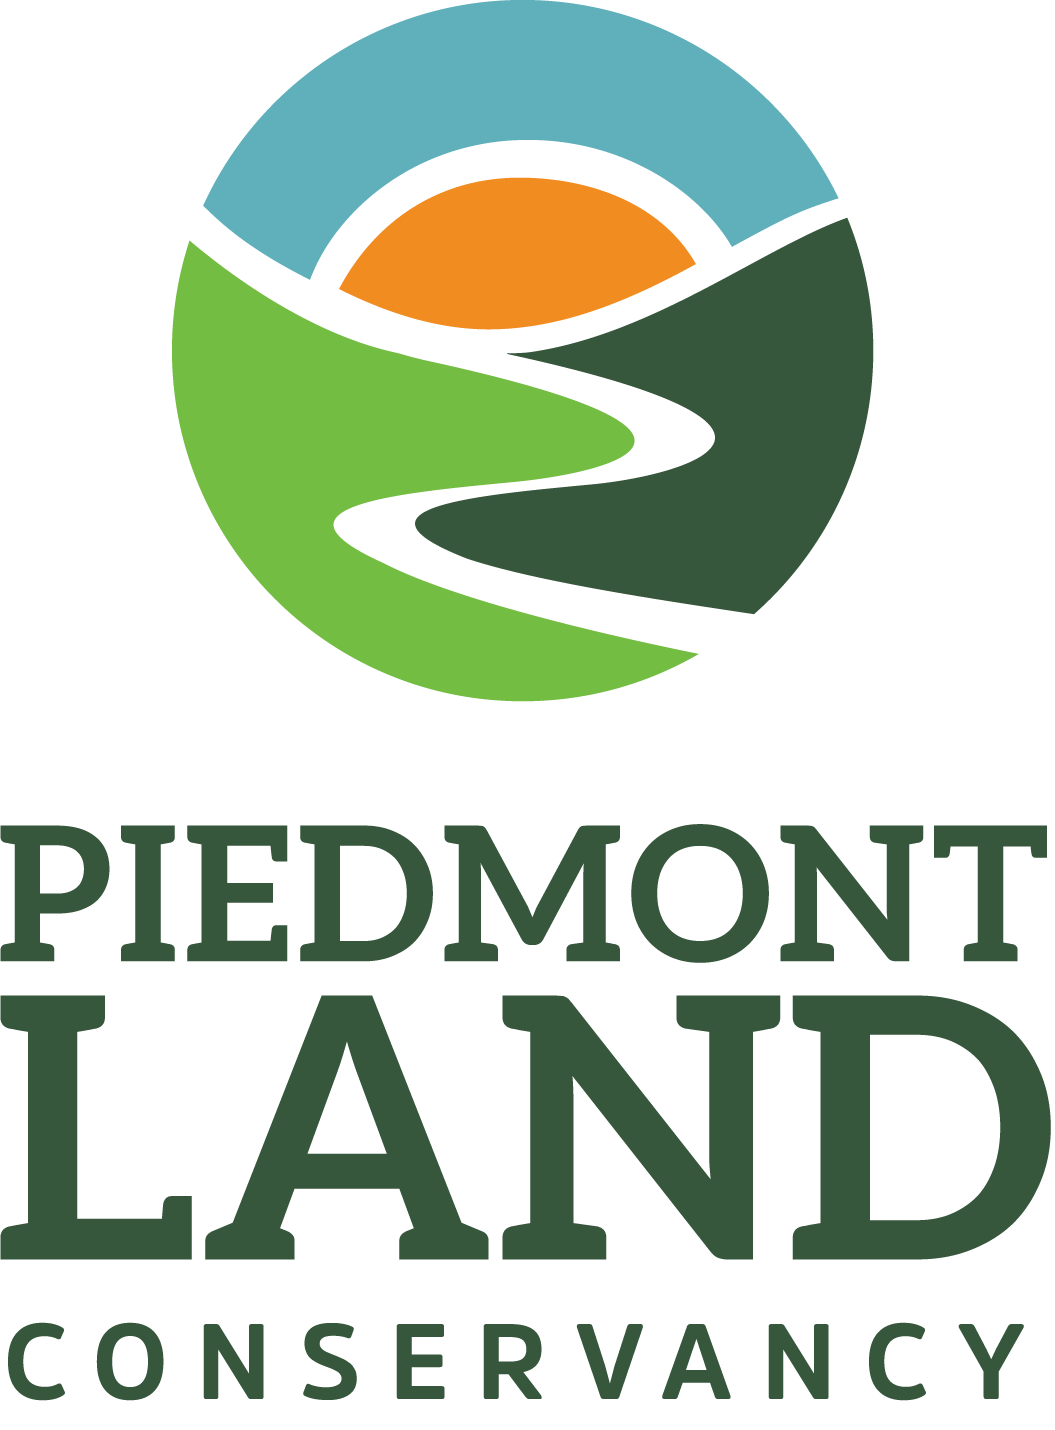 Piedmont Land Conservancy